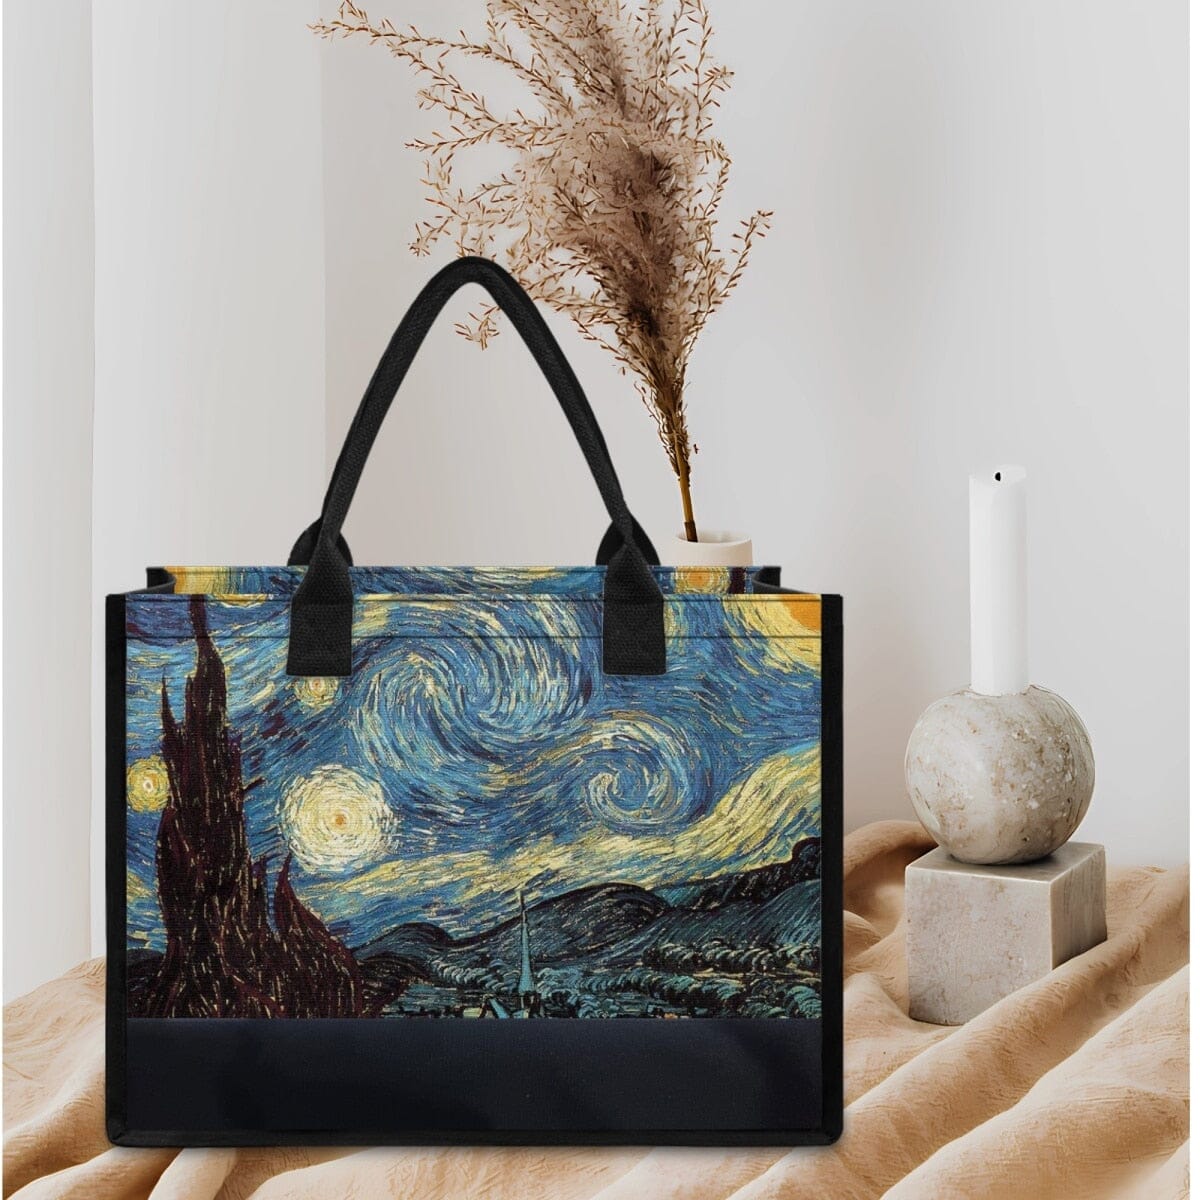 Van Gogh Starry Night Oil Painting Designer Tote Bag for Women Travel Party Beach Canvas Bag Halloween Christmas Gift Handbags 0 GatoGeek 